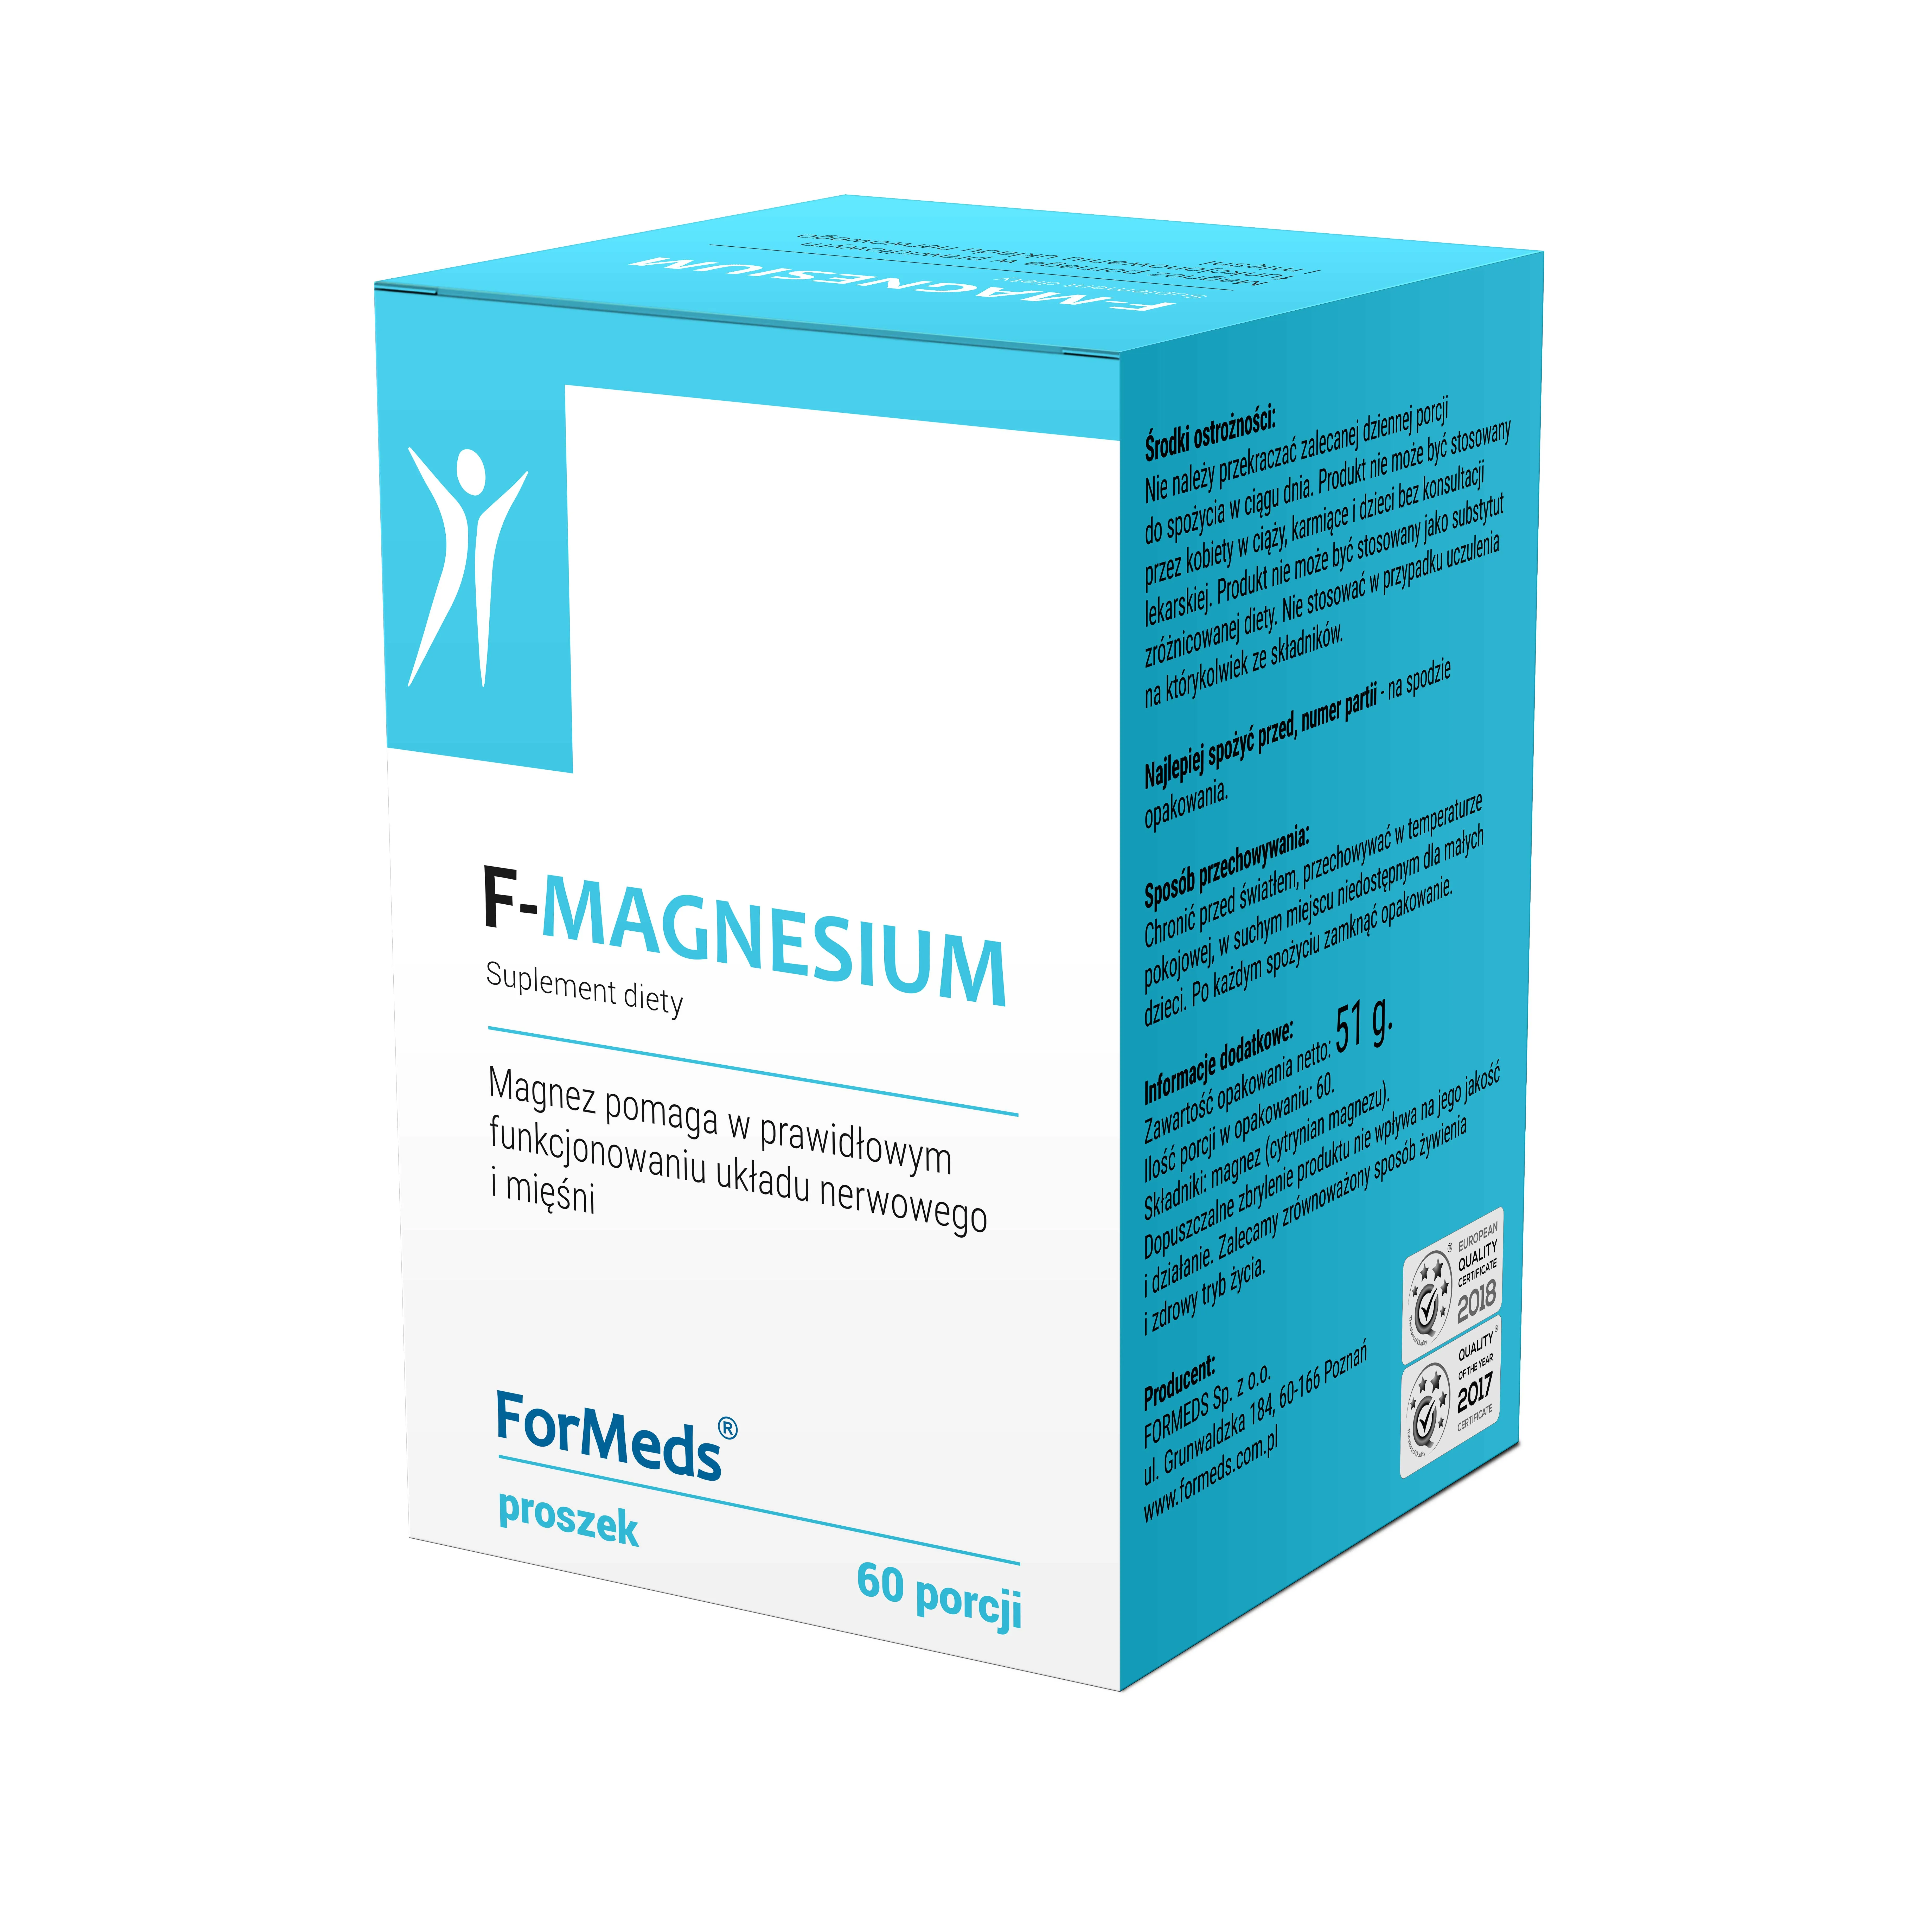 ForMeds F-Magnesium, suplement diety, proszek, 60 porcji